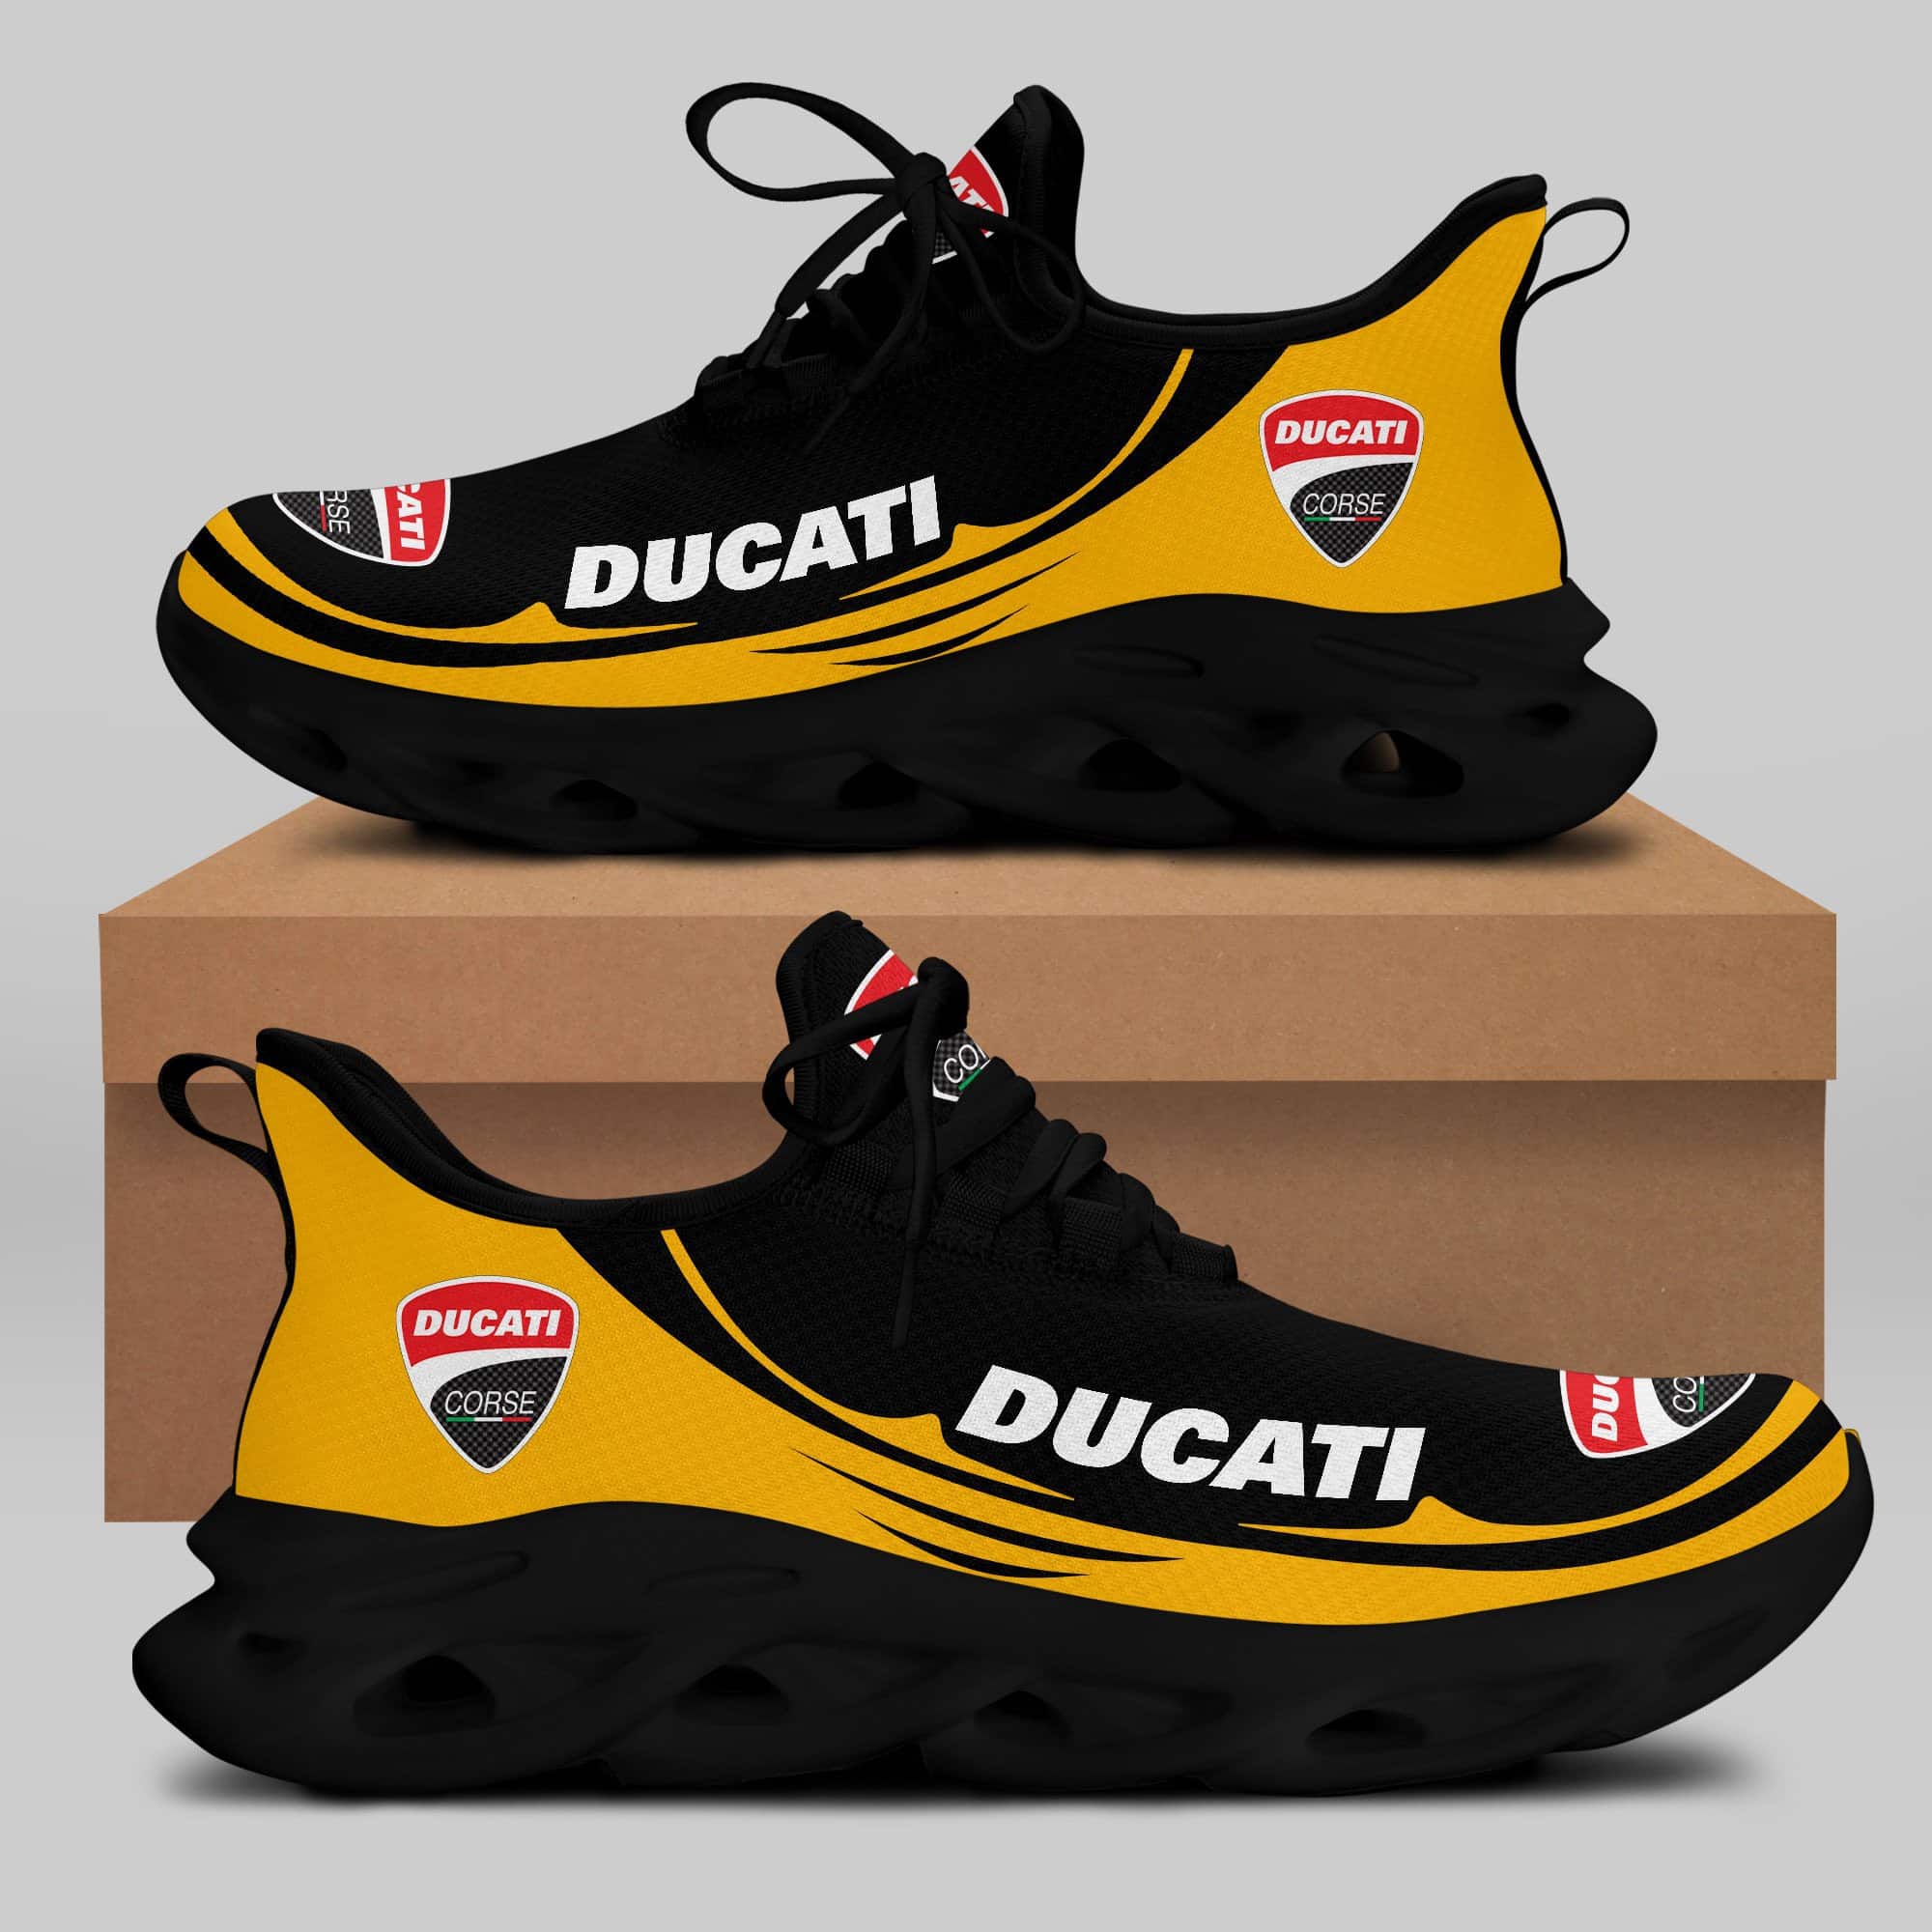 Ducati Racing Running Shoes Max Soul Shoes Sneakers Ver 43 1